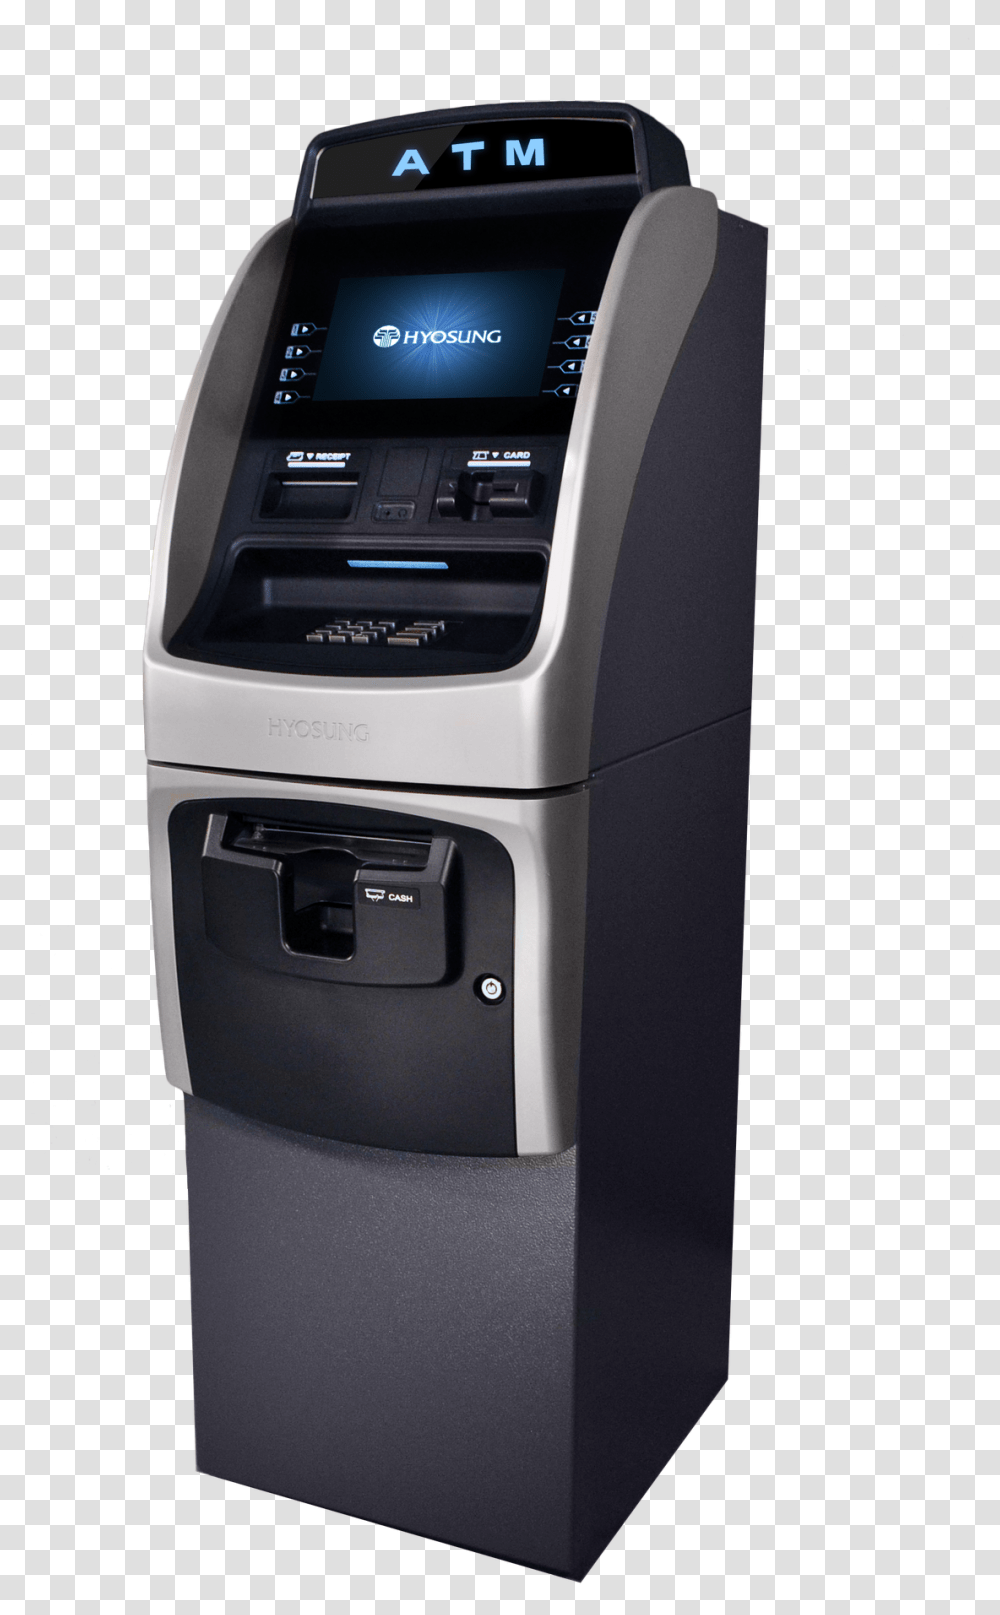 Atm Machine Image Background Hyosung Atm Machine, Cash Machine, Mobile Phone, Electronics, Cell Phone Transparent Png